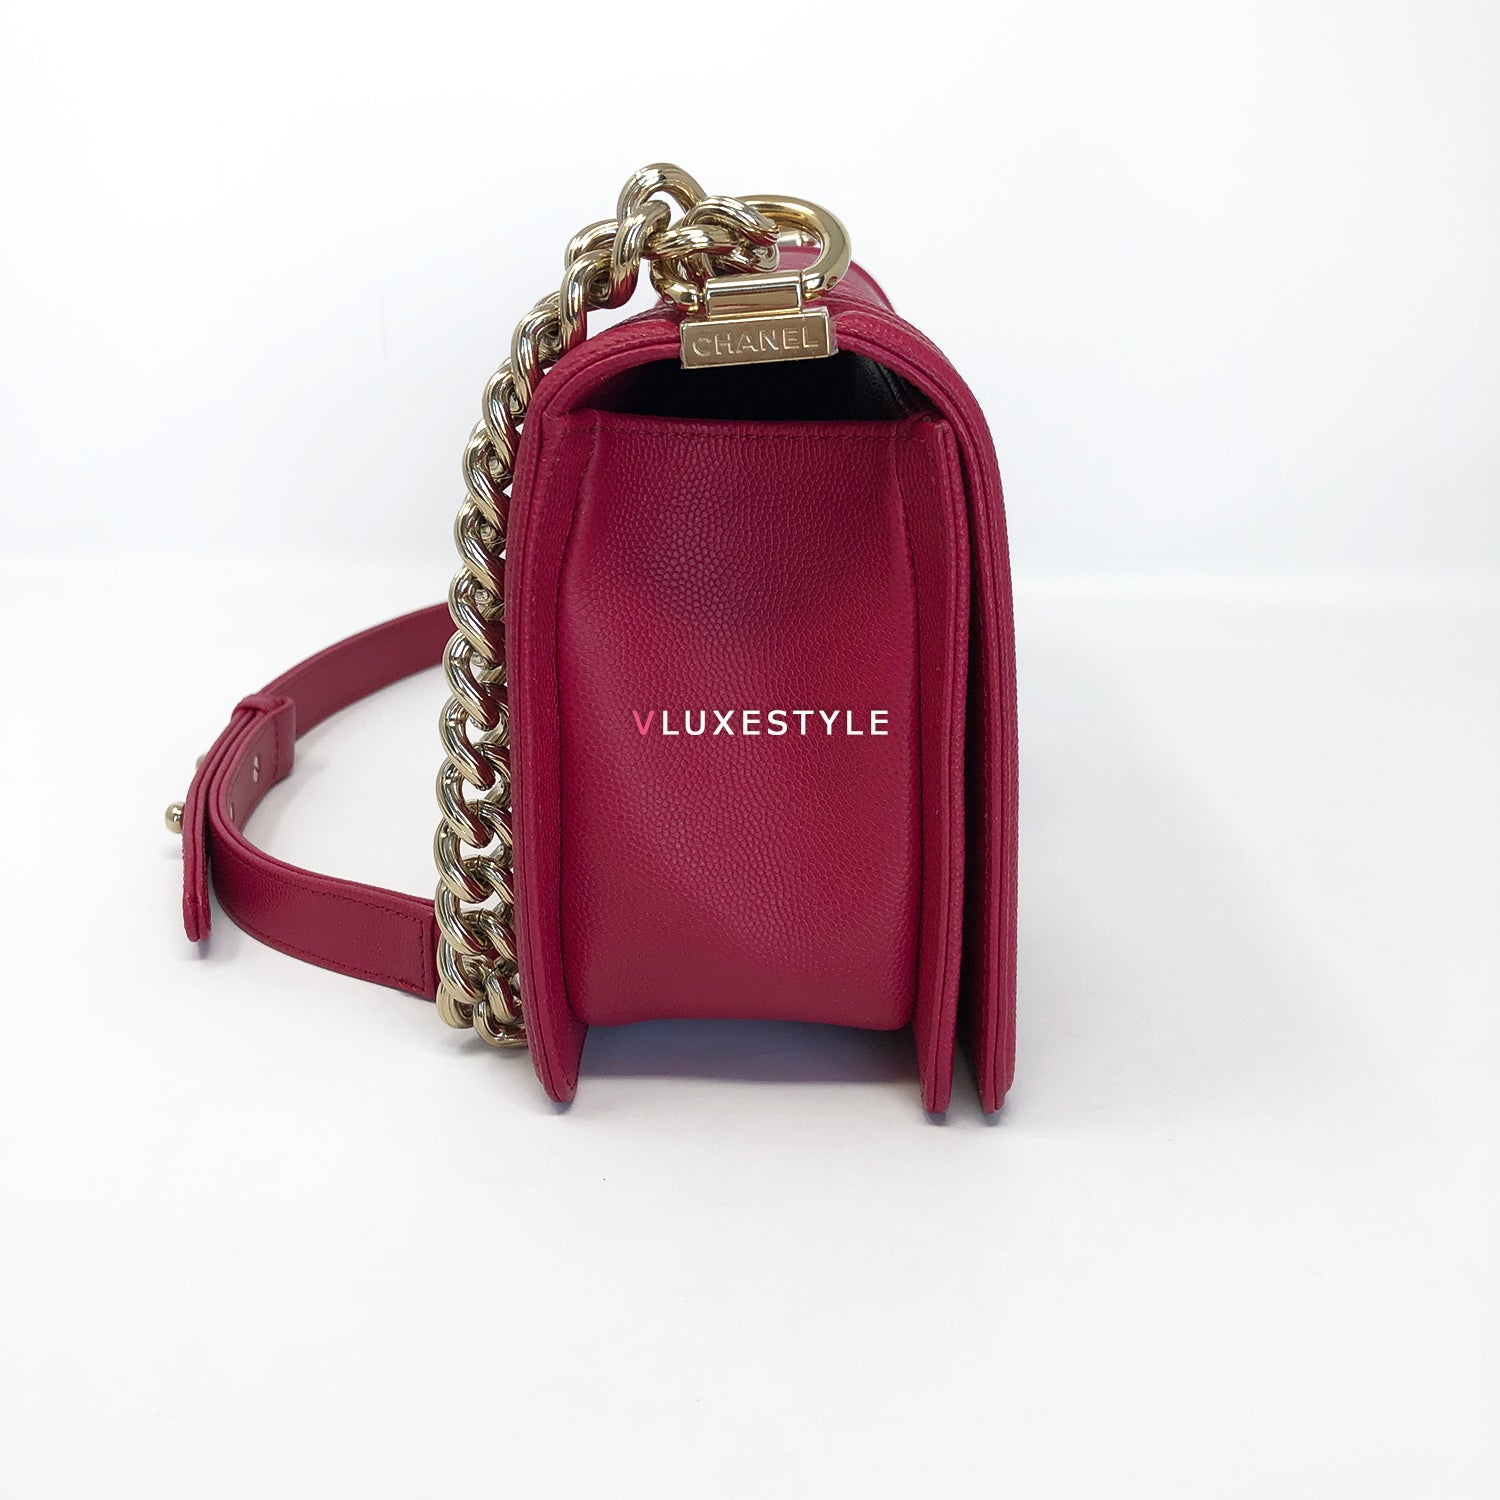 Small flap bag, Patent calfskin & gold-tone metal, coral pink — Fashion